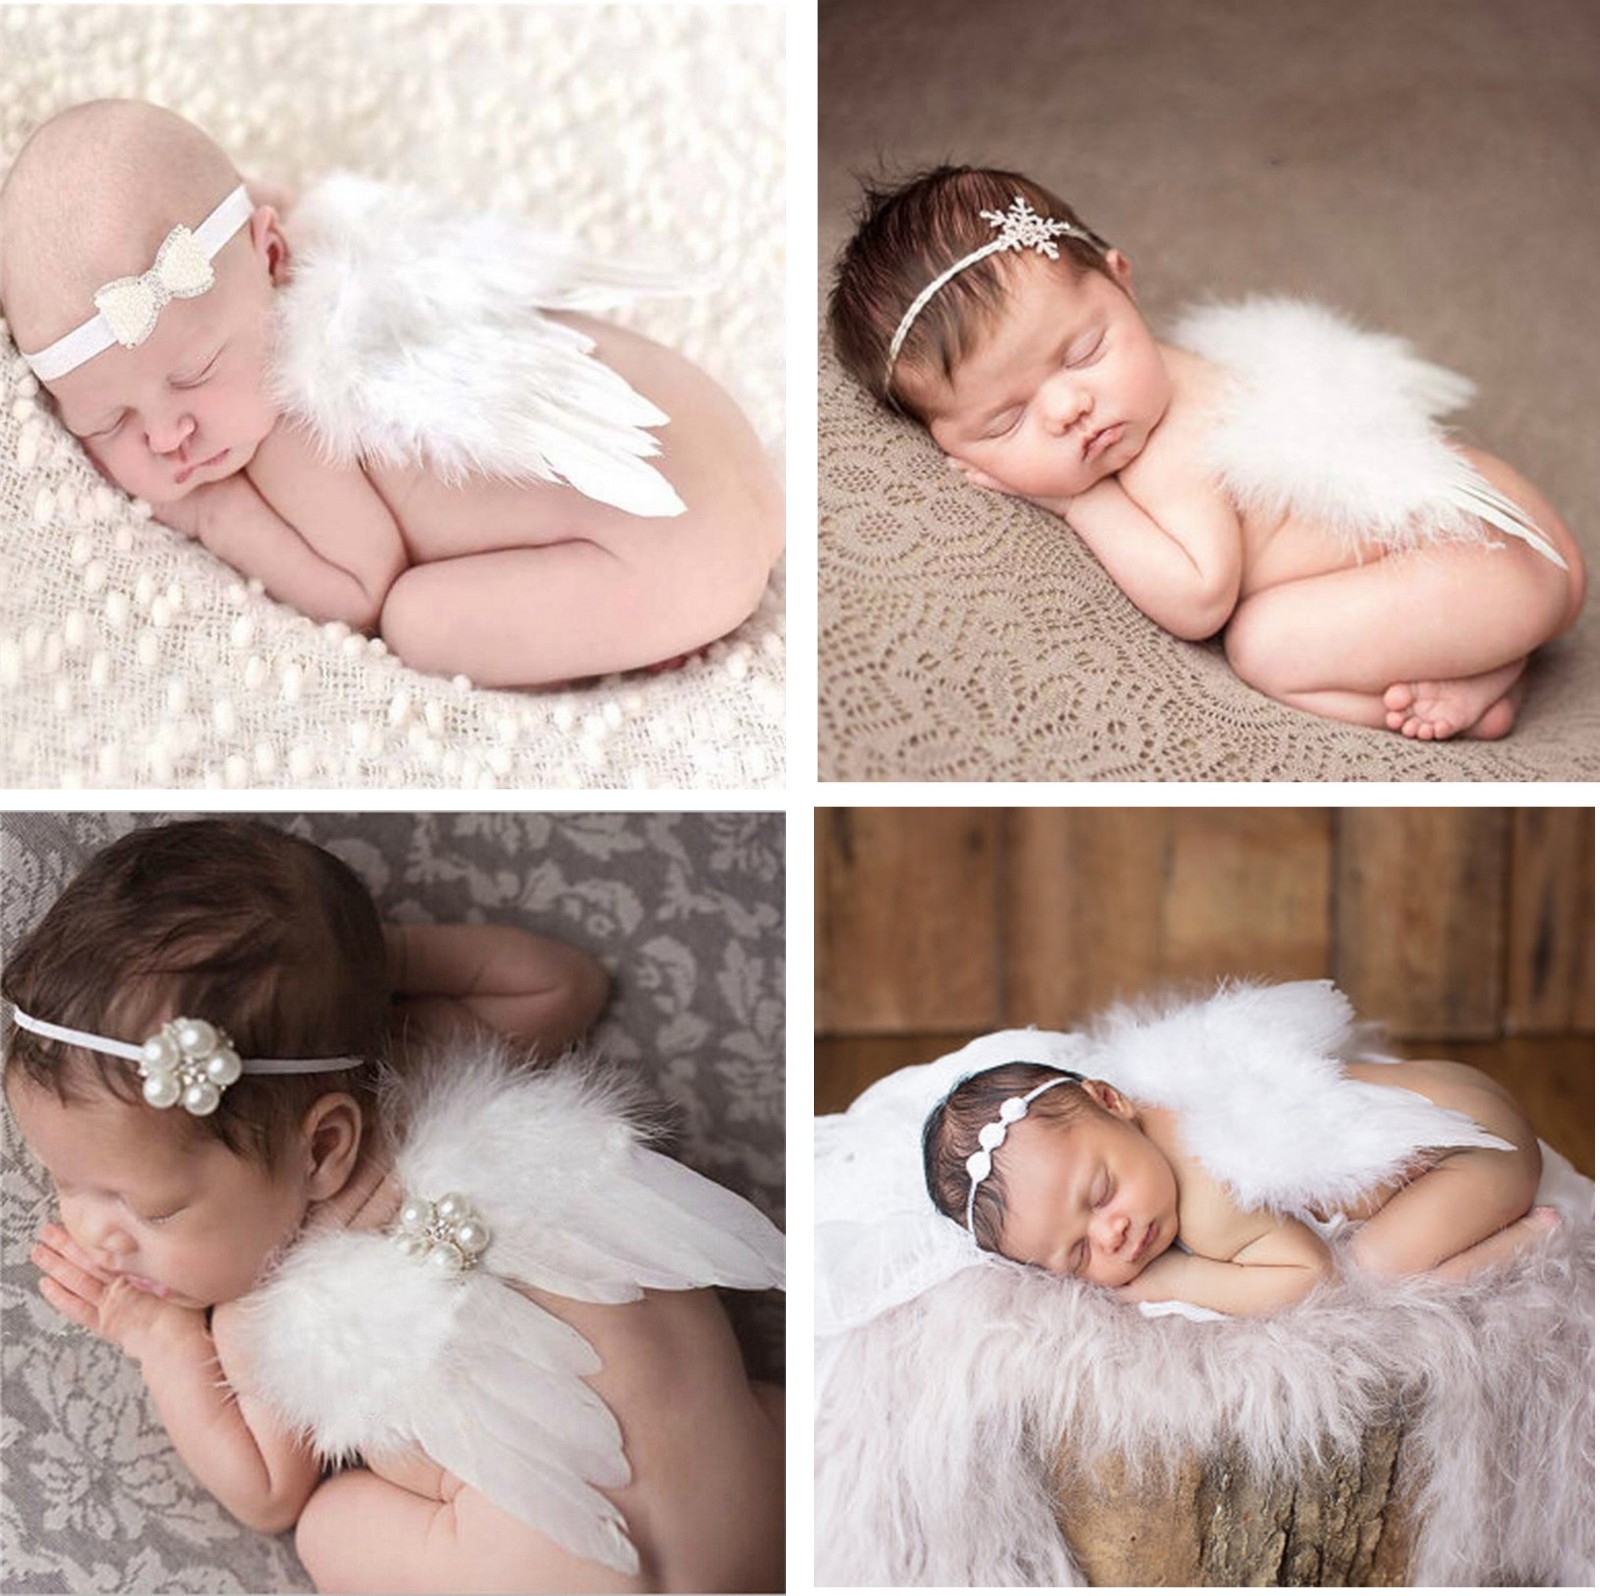 Baby Engel Flugel Stirnband Fotoshooting Newborn Neugeborenen Fotografie Ebay